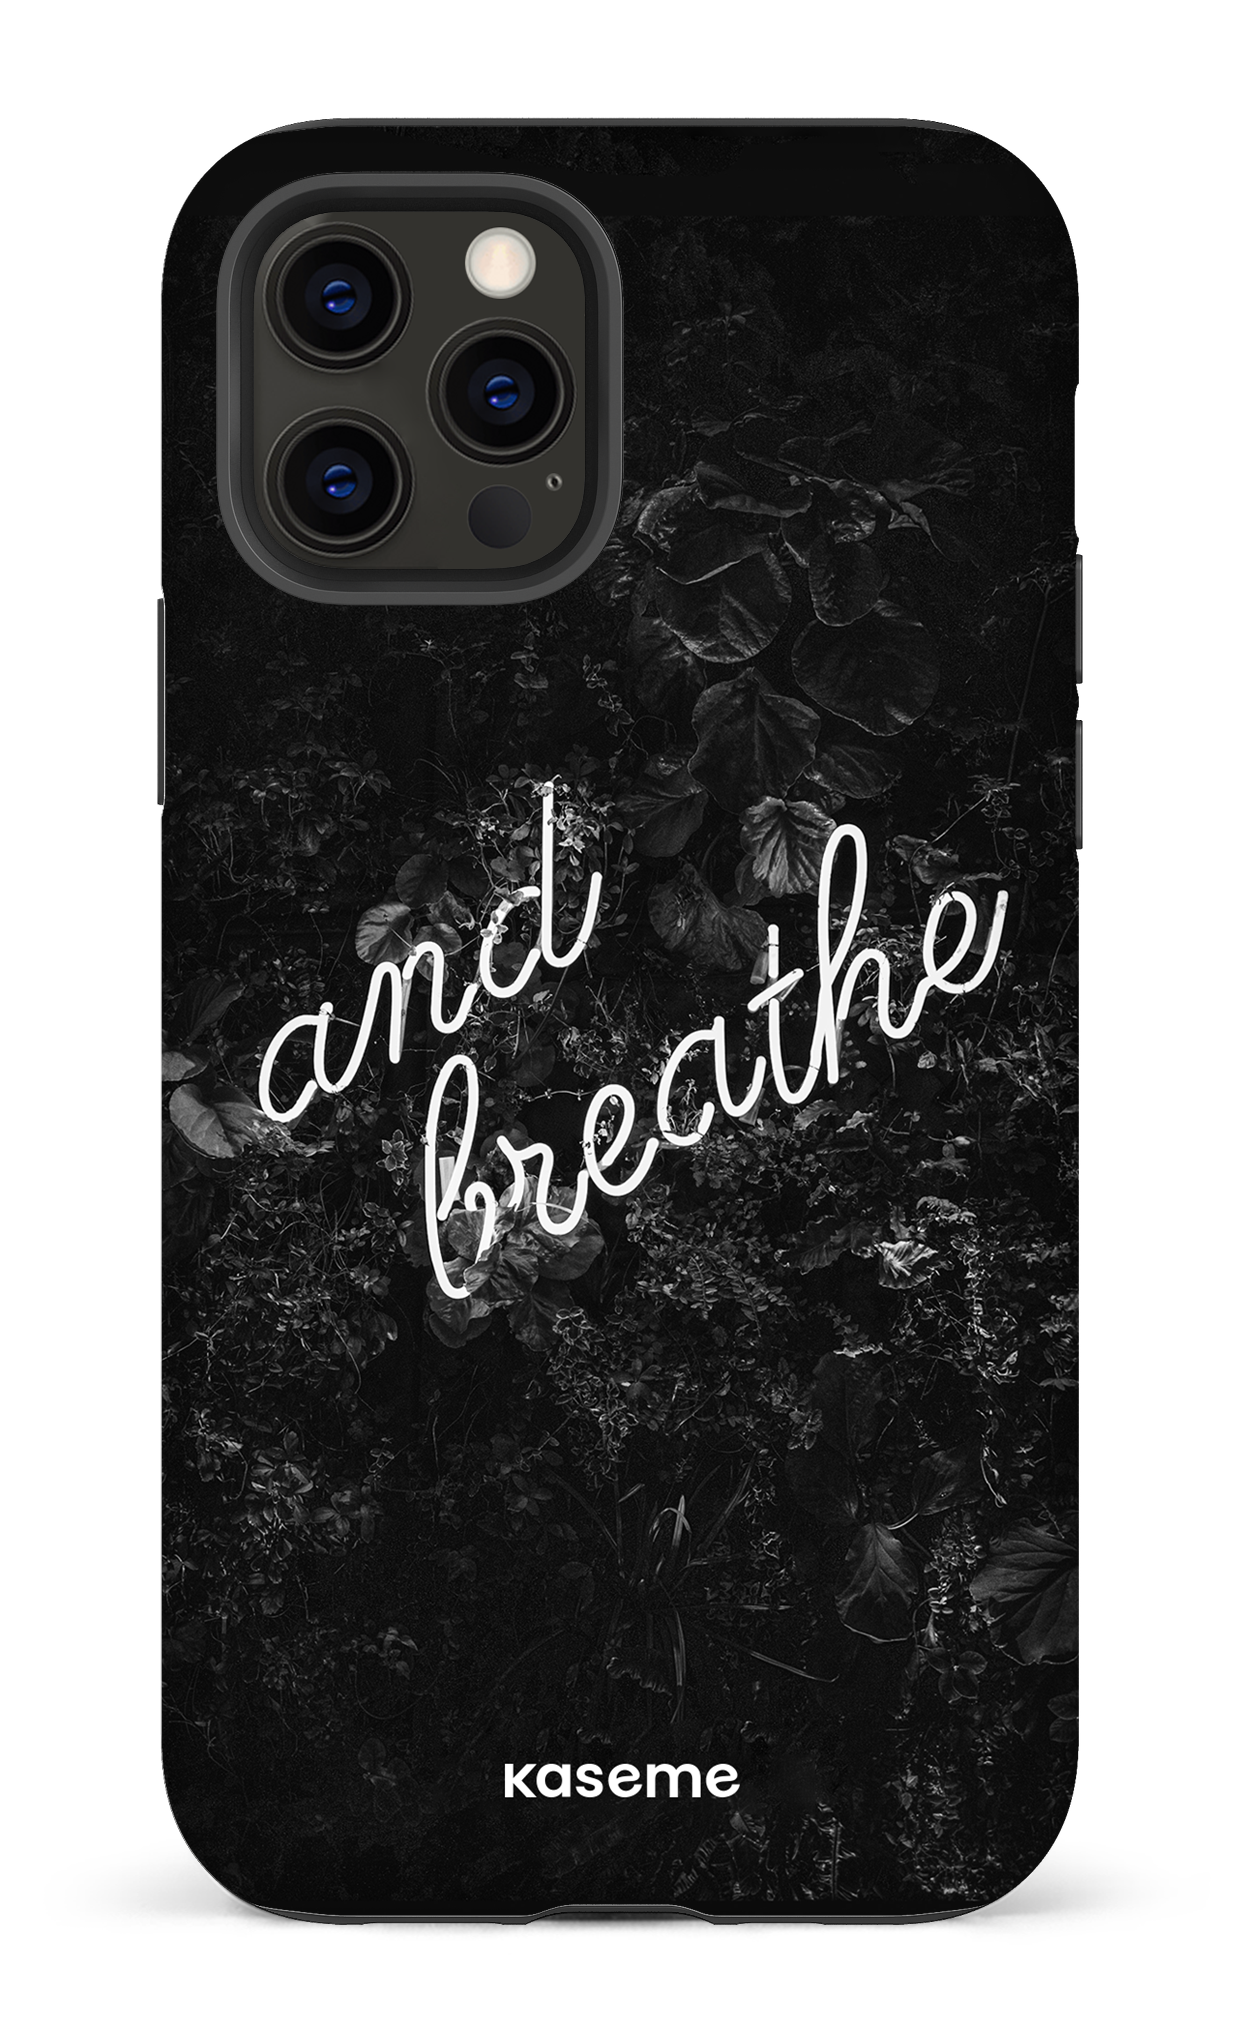 Exhale - iPhone 12 Pro